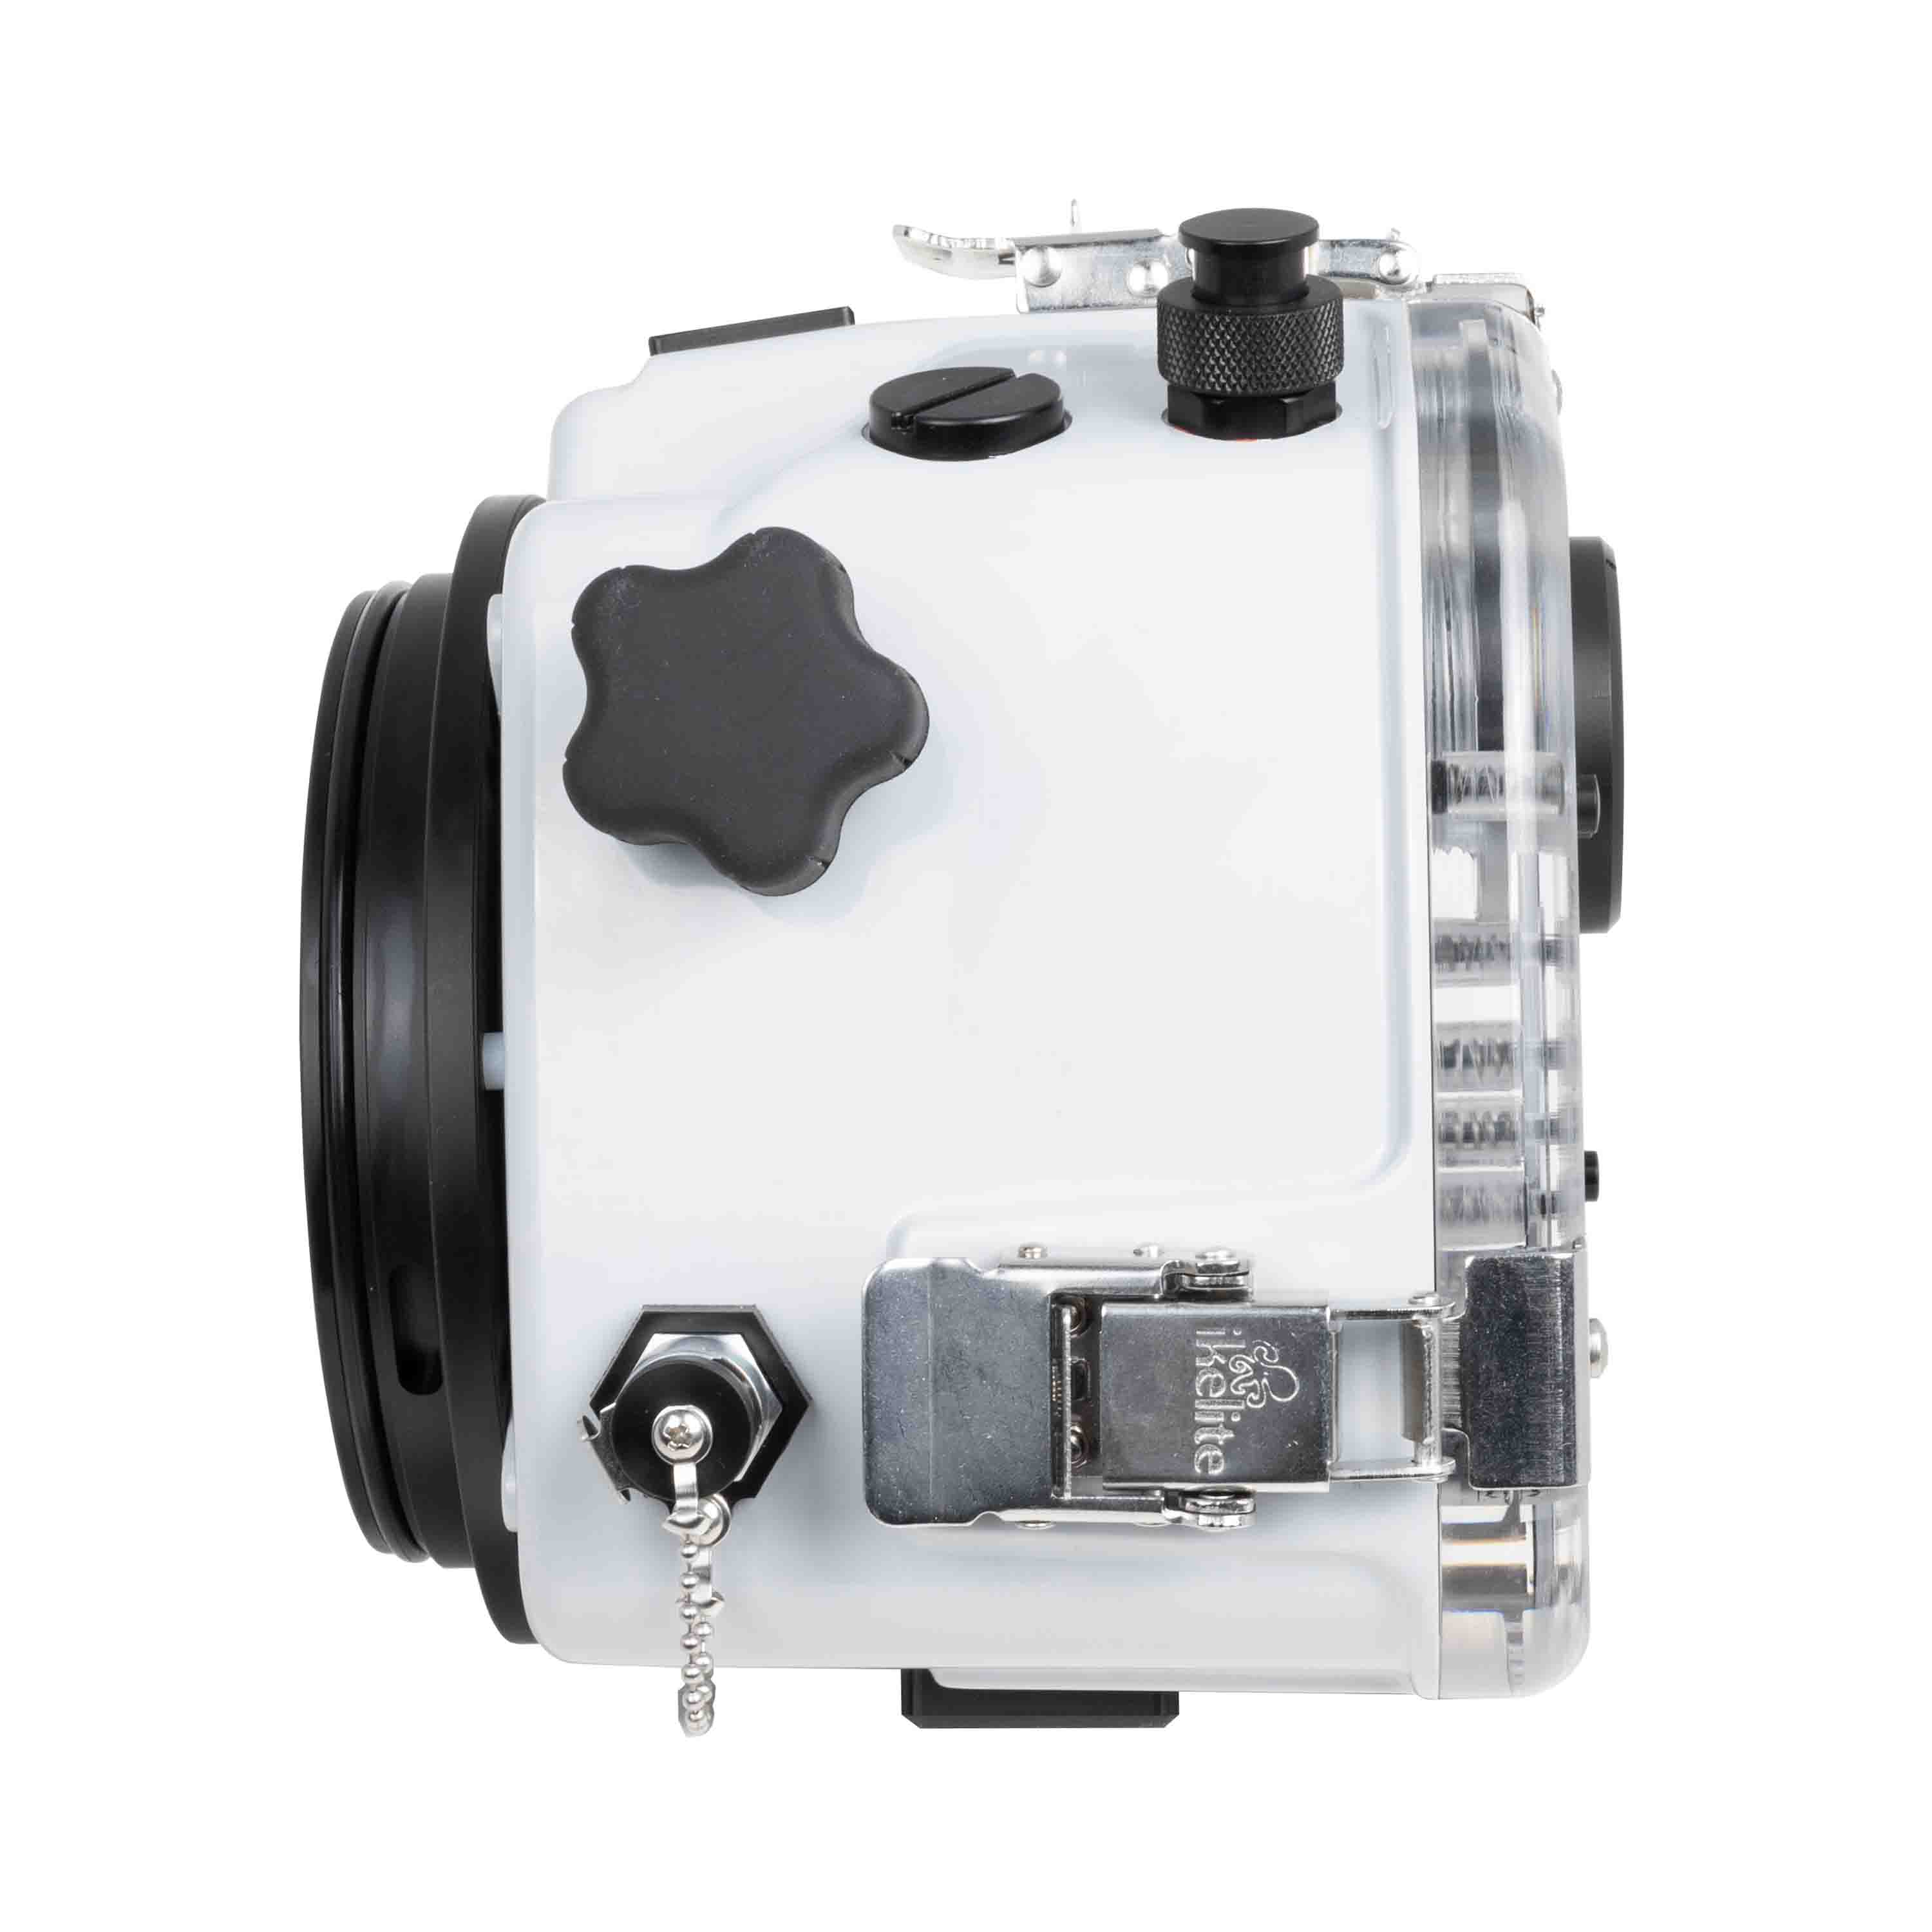 Ikelite 200DL Underwater Housing for Sony a7 IV, a7R V Mirrorless Digital Cameras